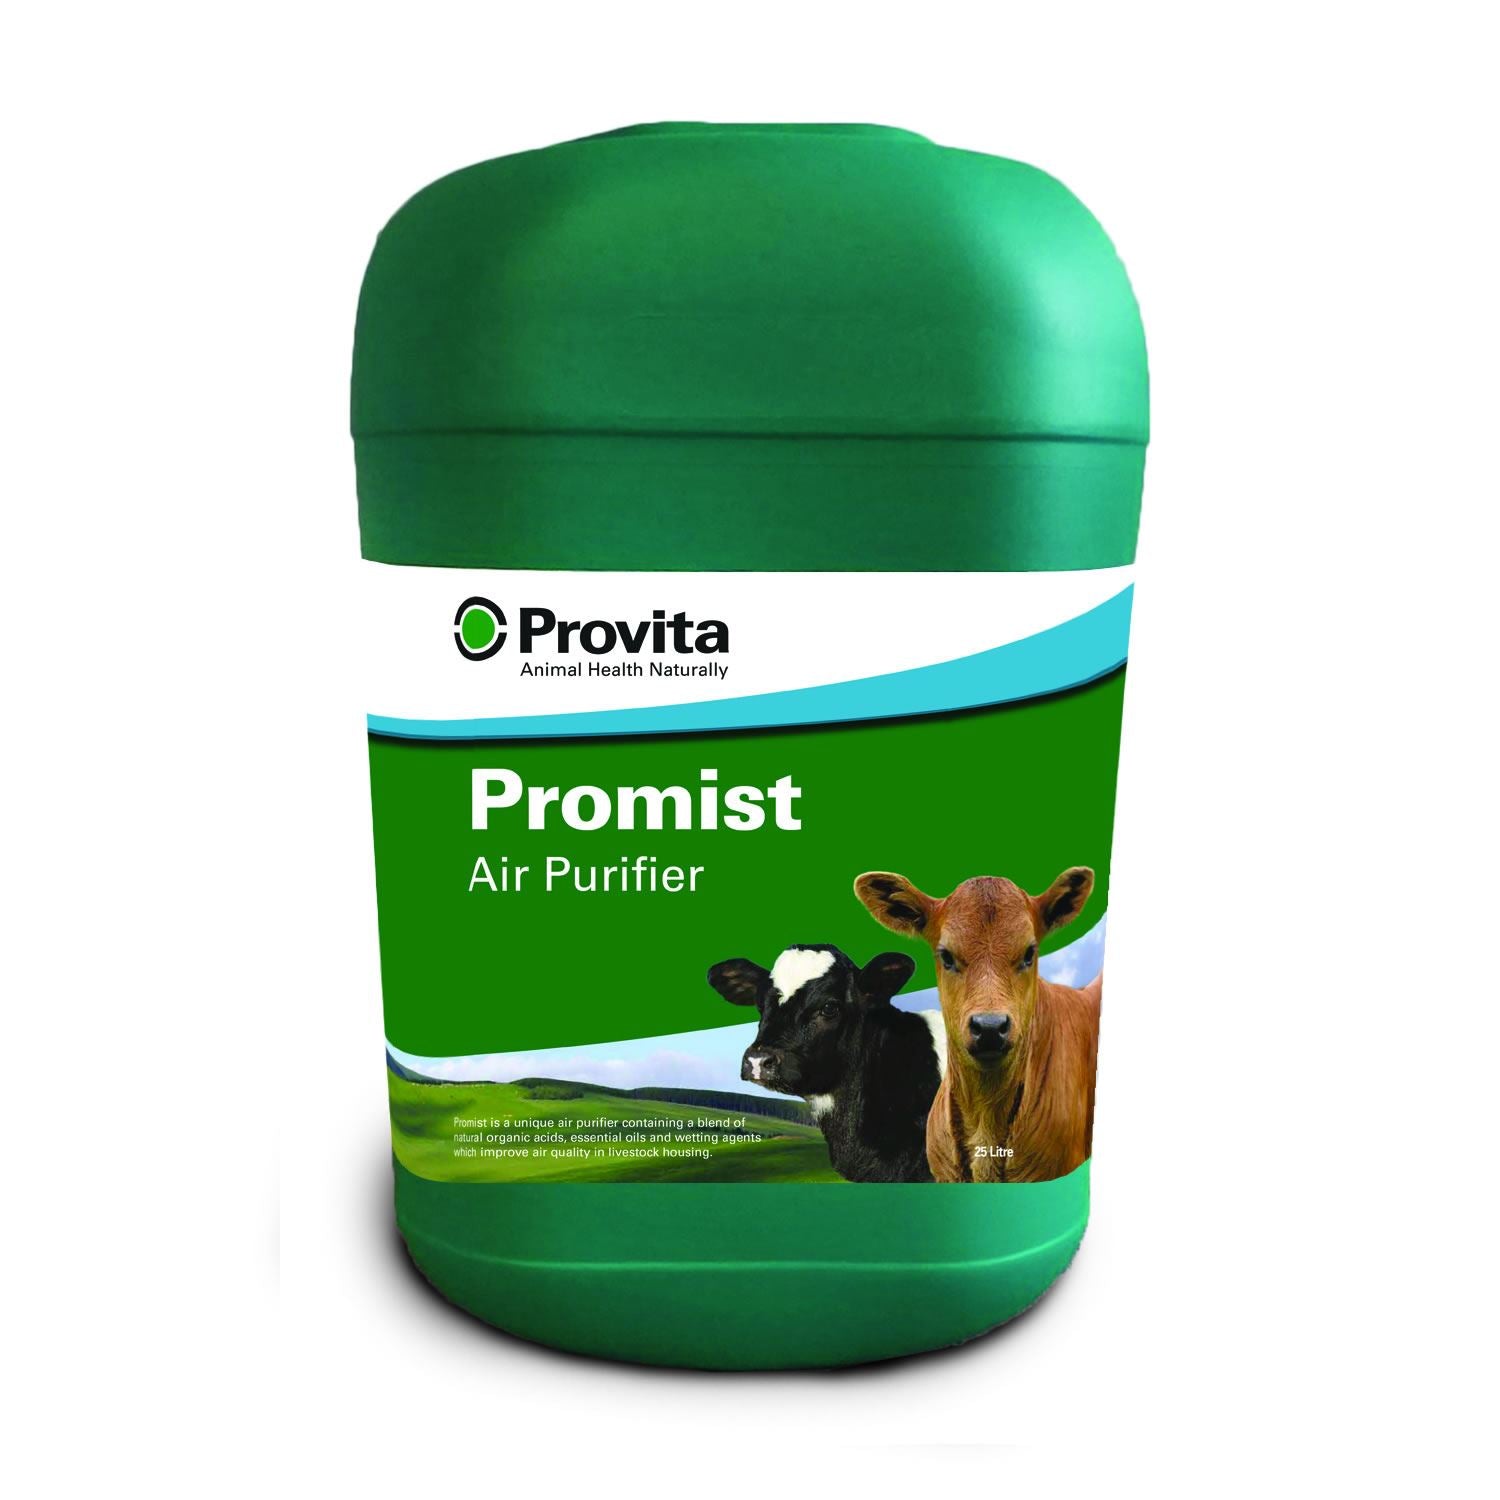 Provita Promist - Just Horse Riders